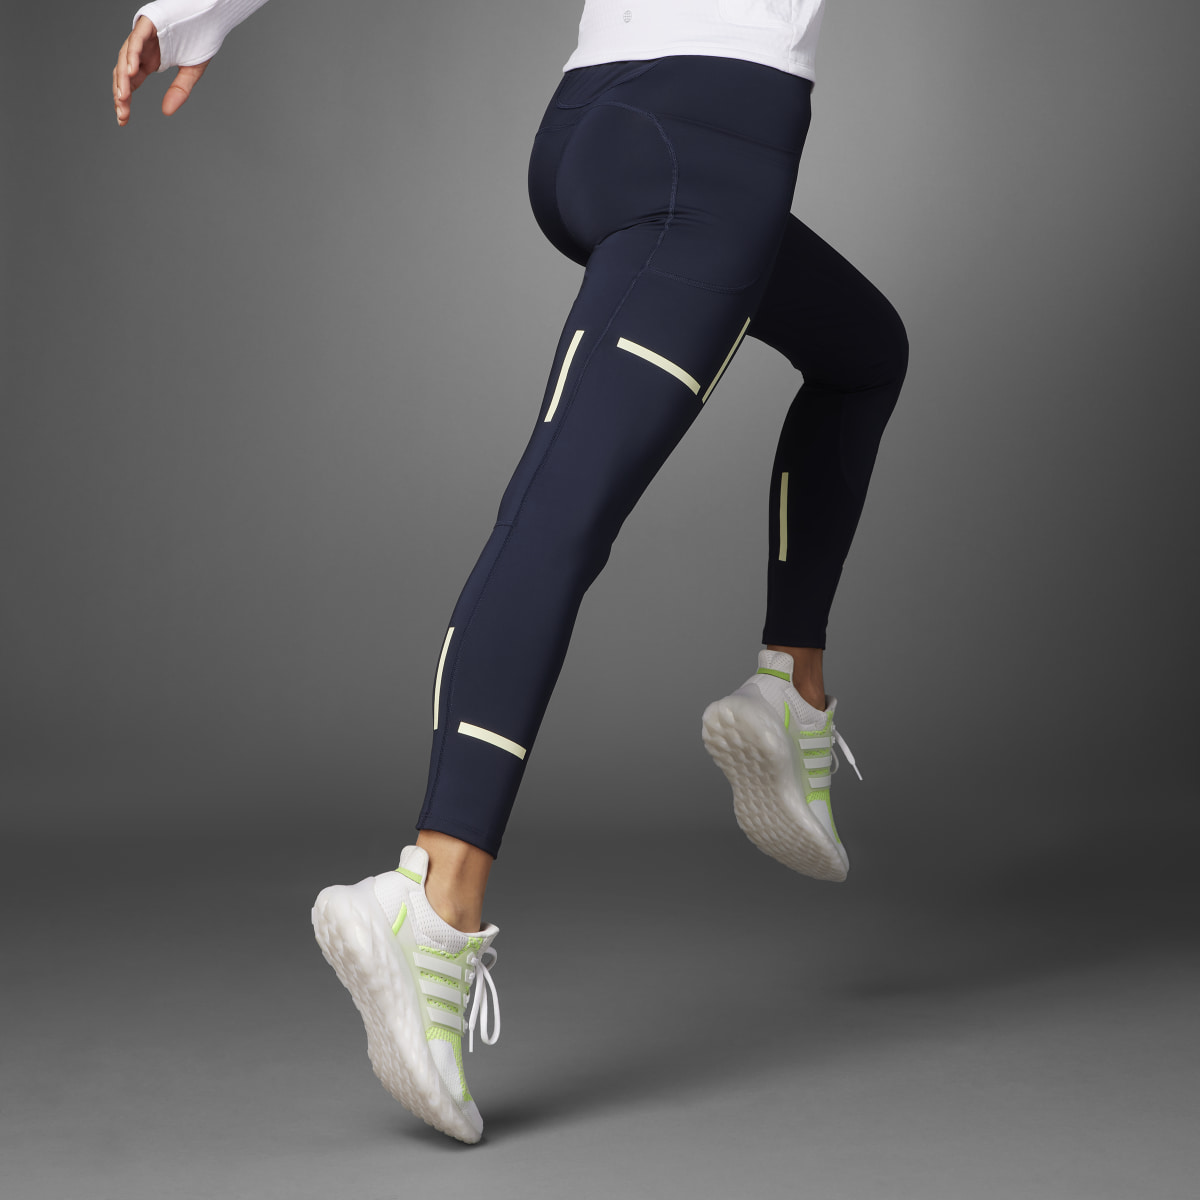 Adidas Fast Impact Reflect At Night X-City Full-Length Running Leggings. 5